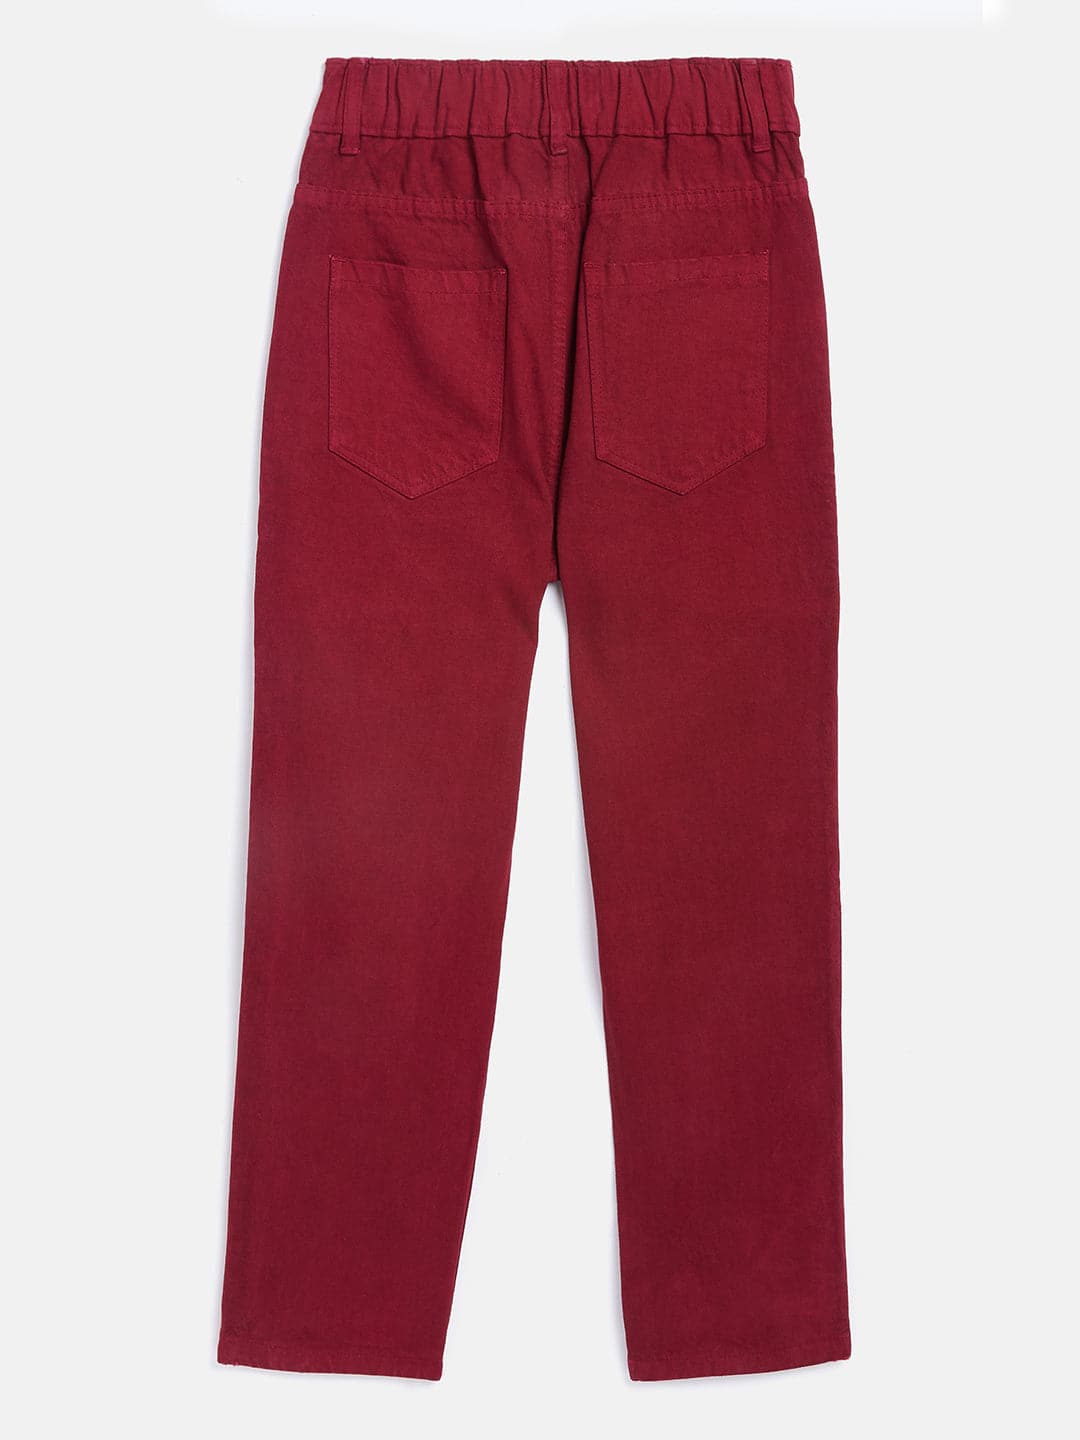 Girls Burgundy Front Pocket Straight Jeans - Lyush Kids